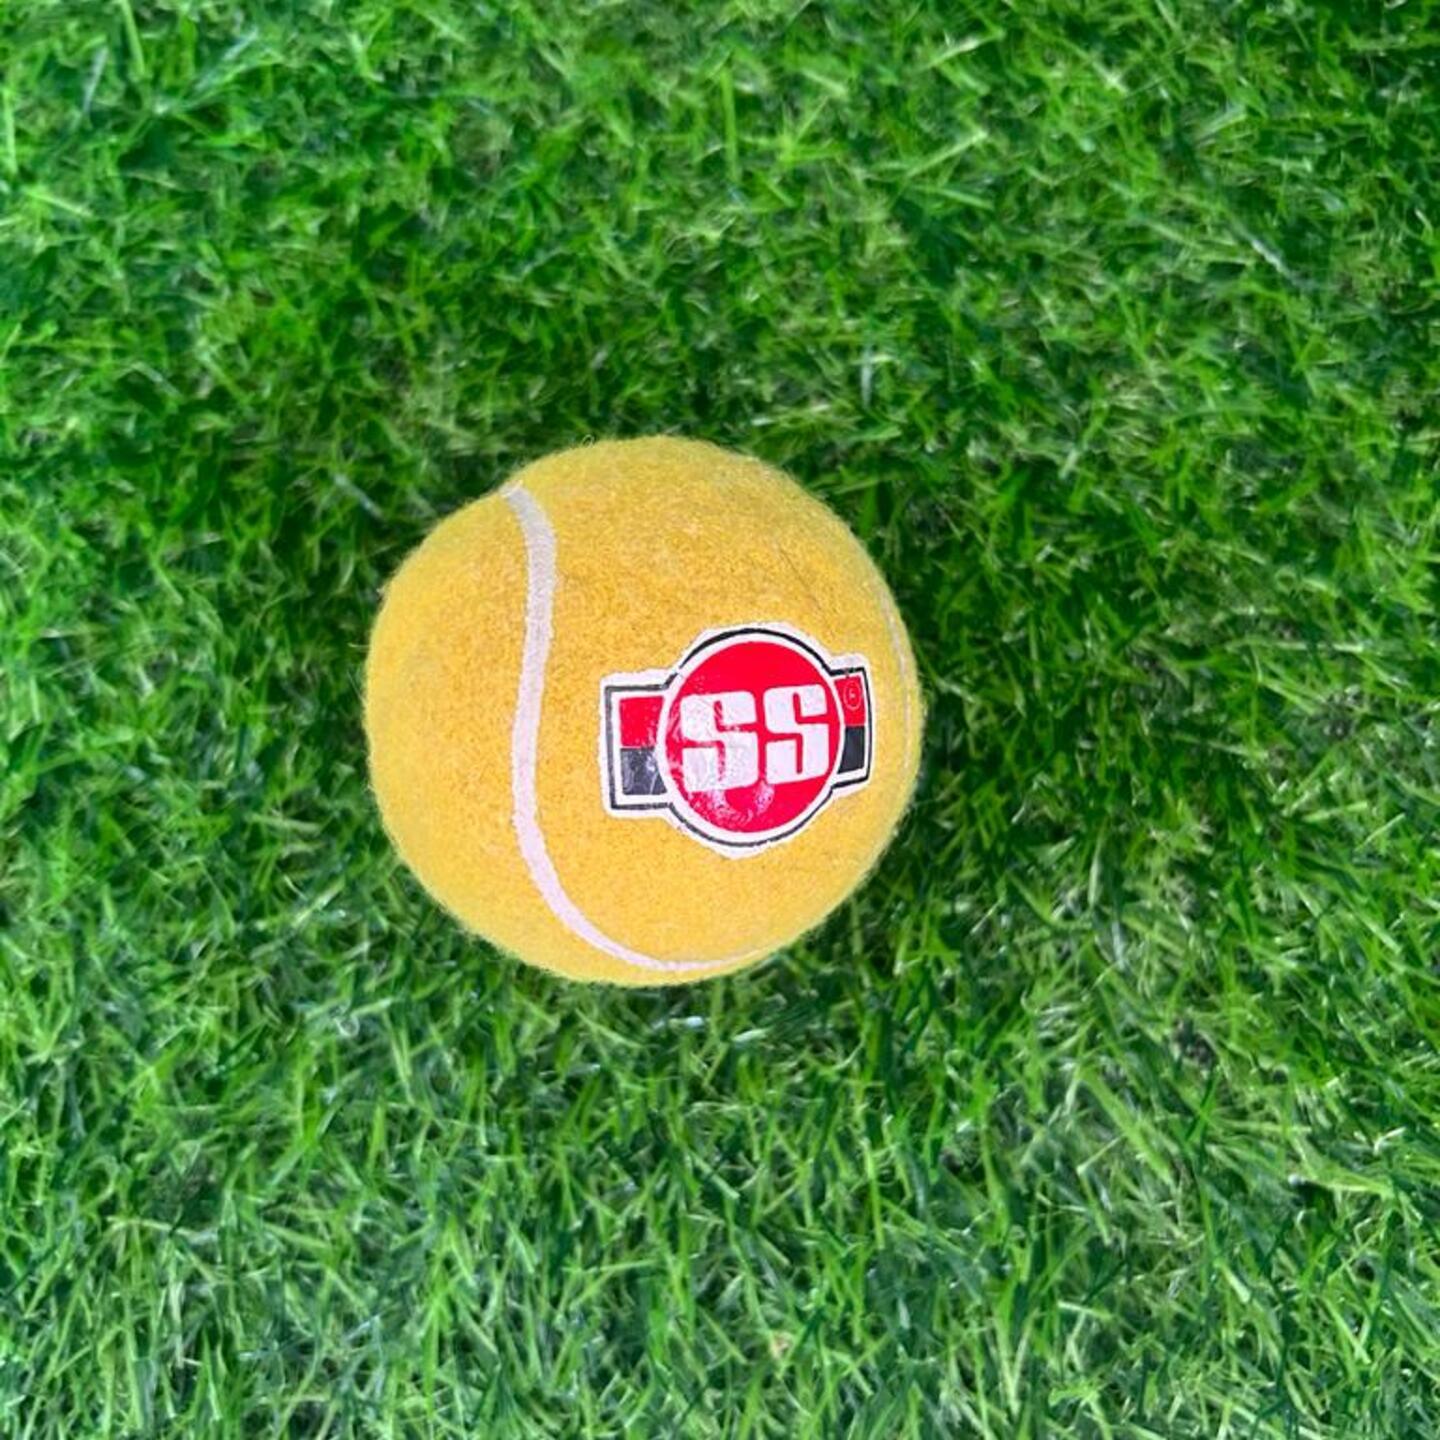 SS SOFT PRO HEAVY TENNIS CRICKET BALL | CRICKET TENNIS BALL